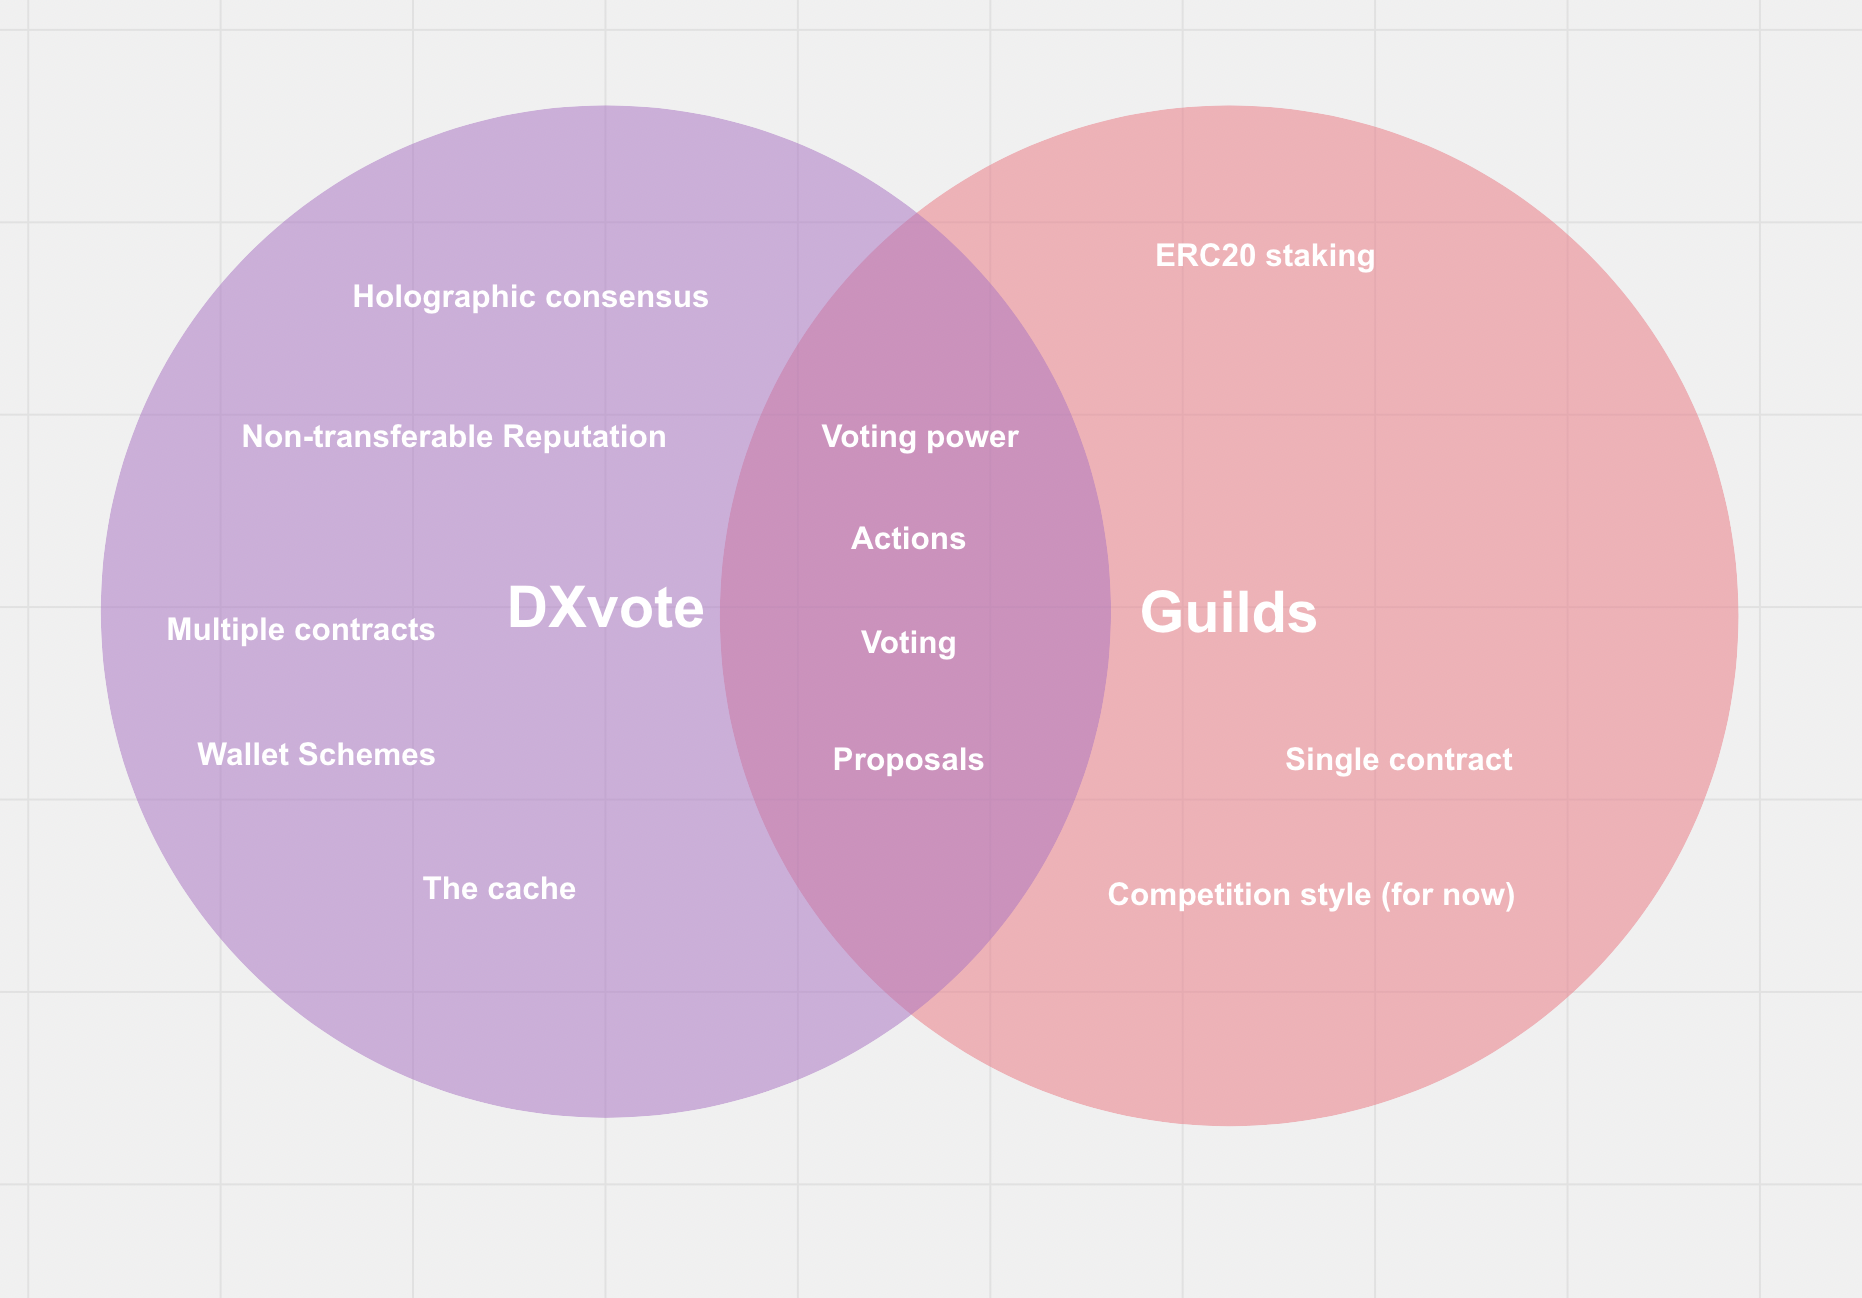 DXvote-Guilds Venn diagram